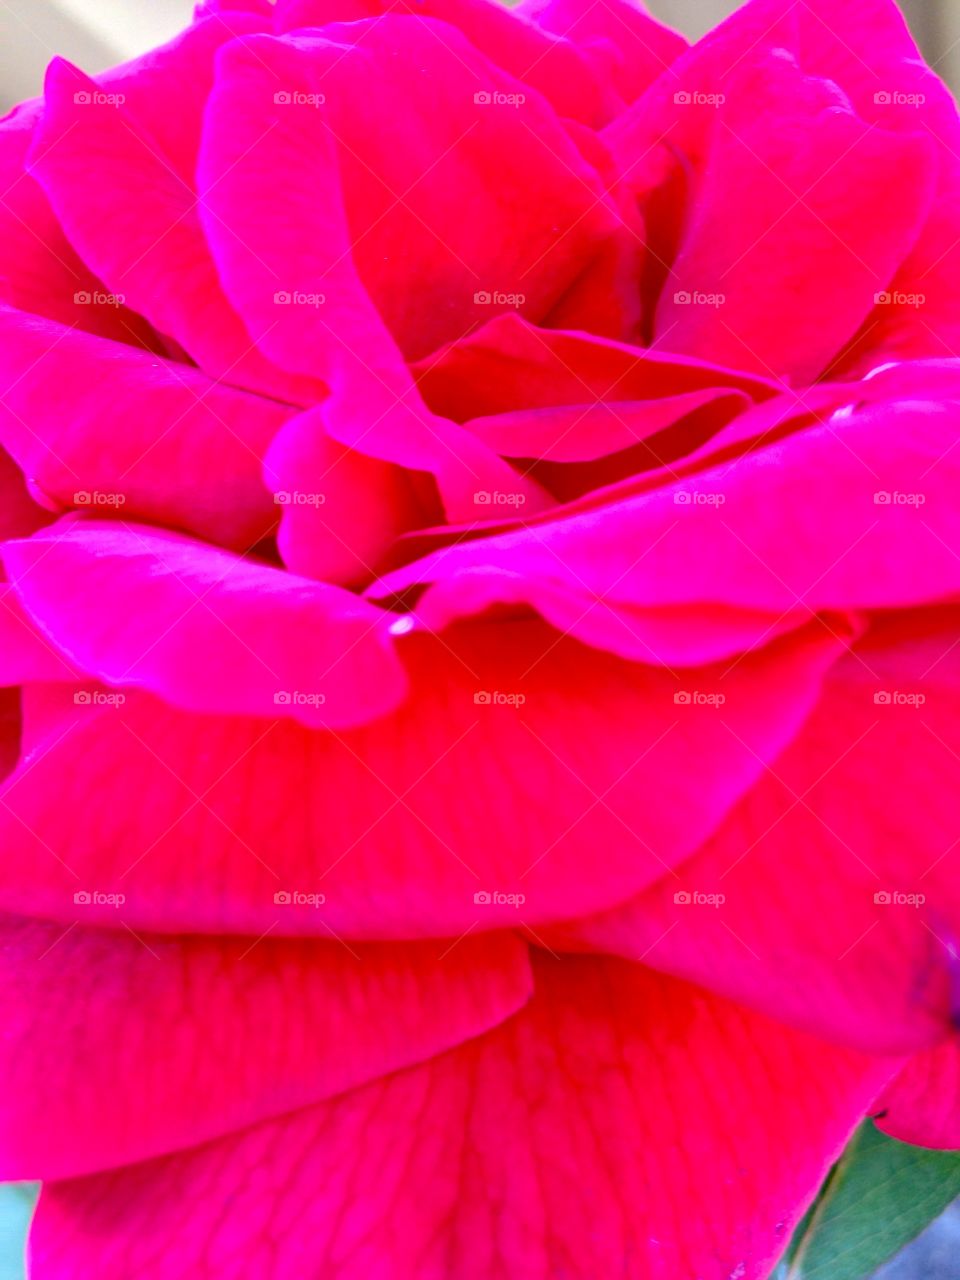 Rose close up